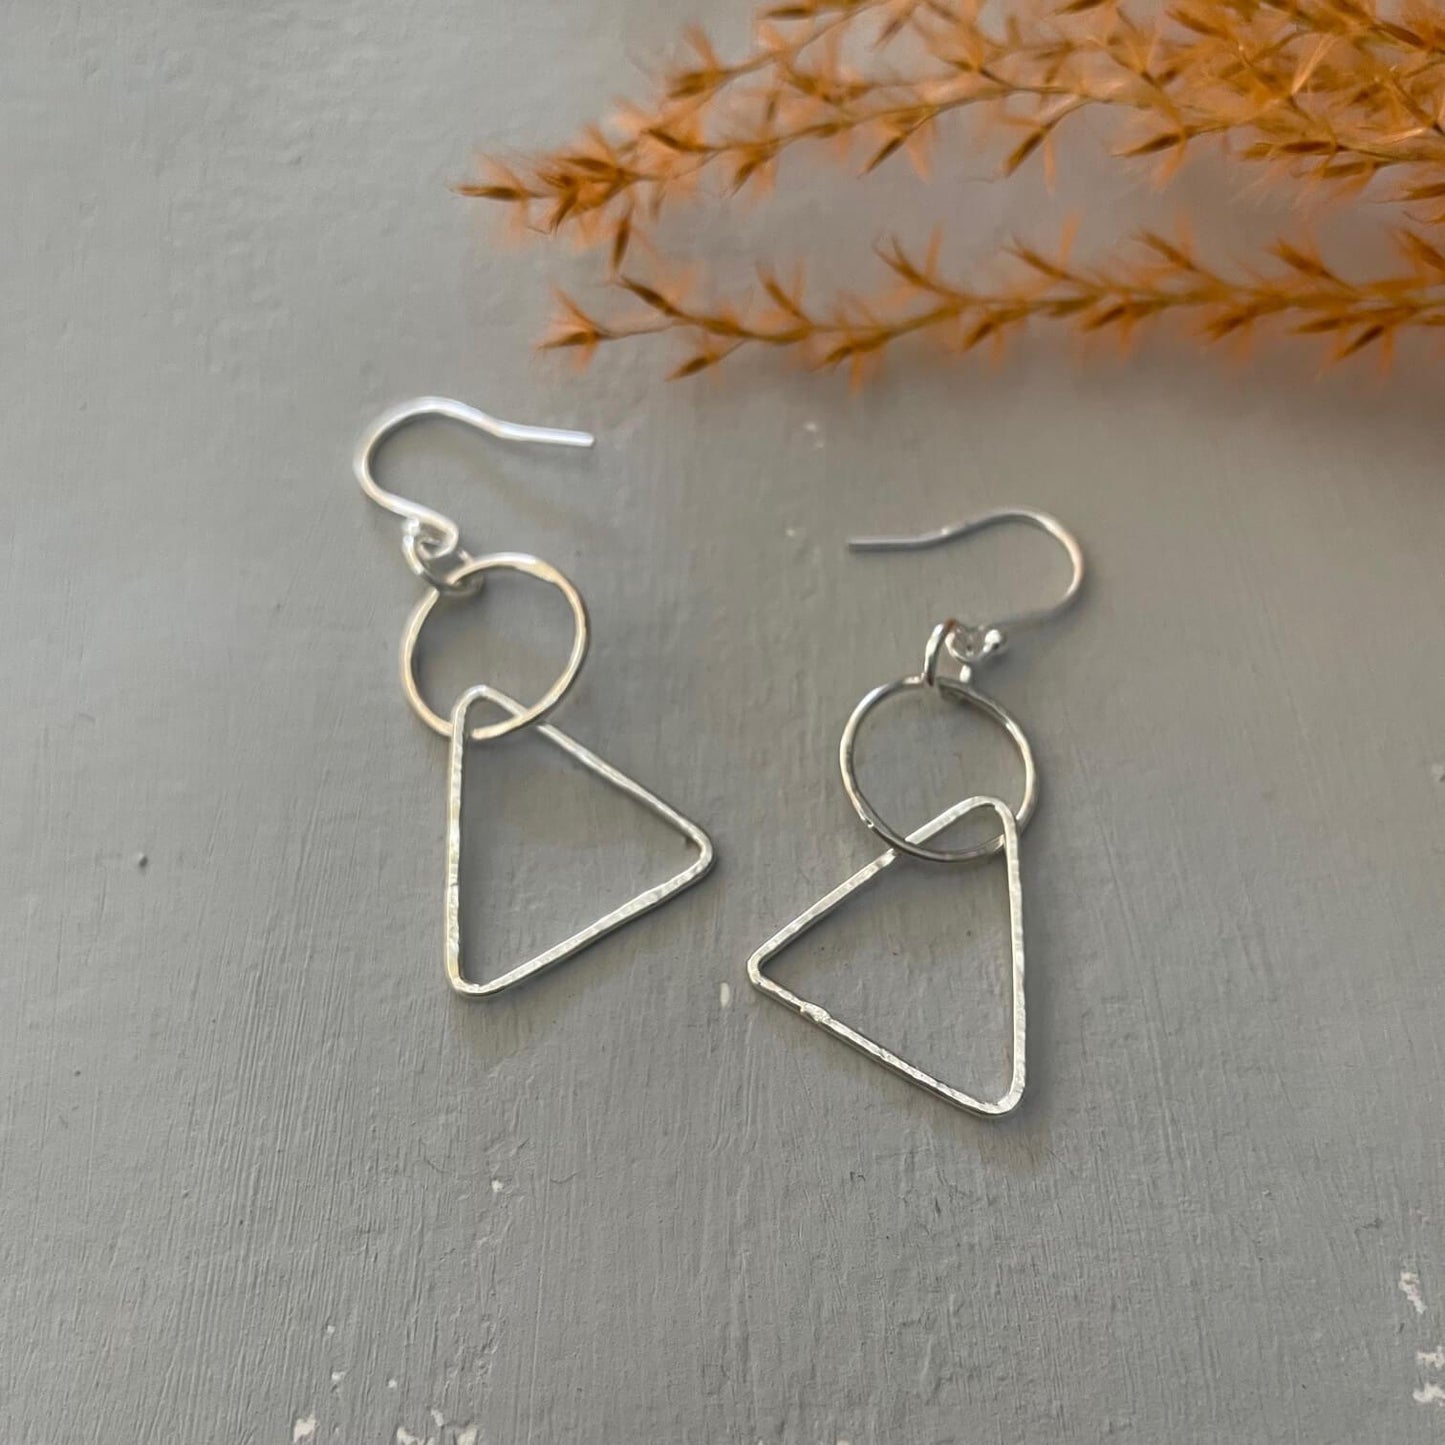 Ava & Bea Earrings Lace Print Circle/Triangle Silver Earrings